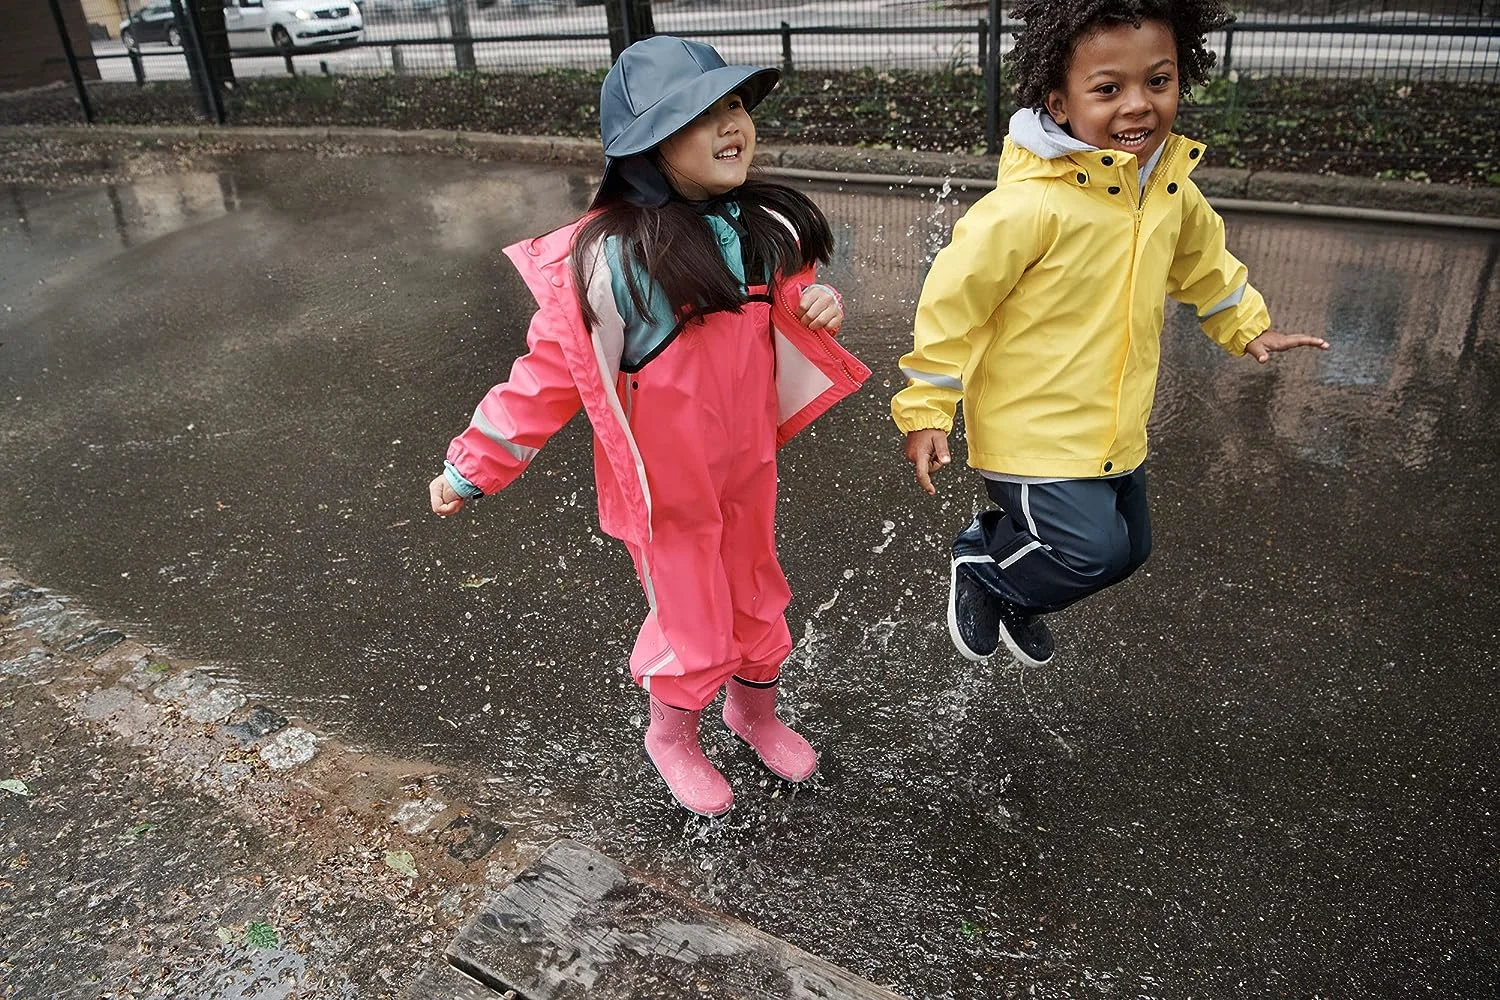 children-enjoying-playing-outside-on-rainy-day.jpg